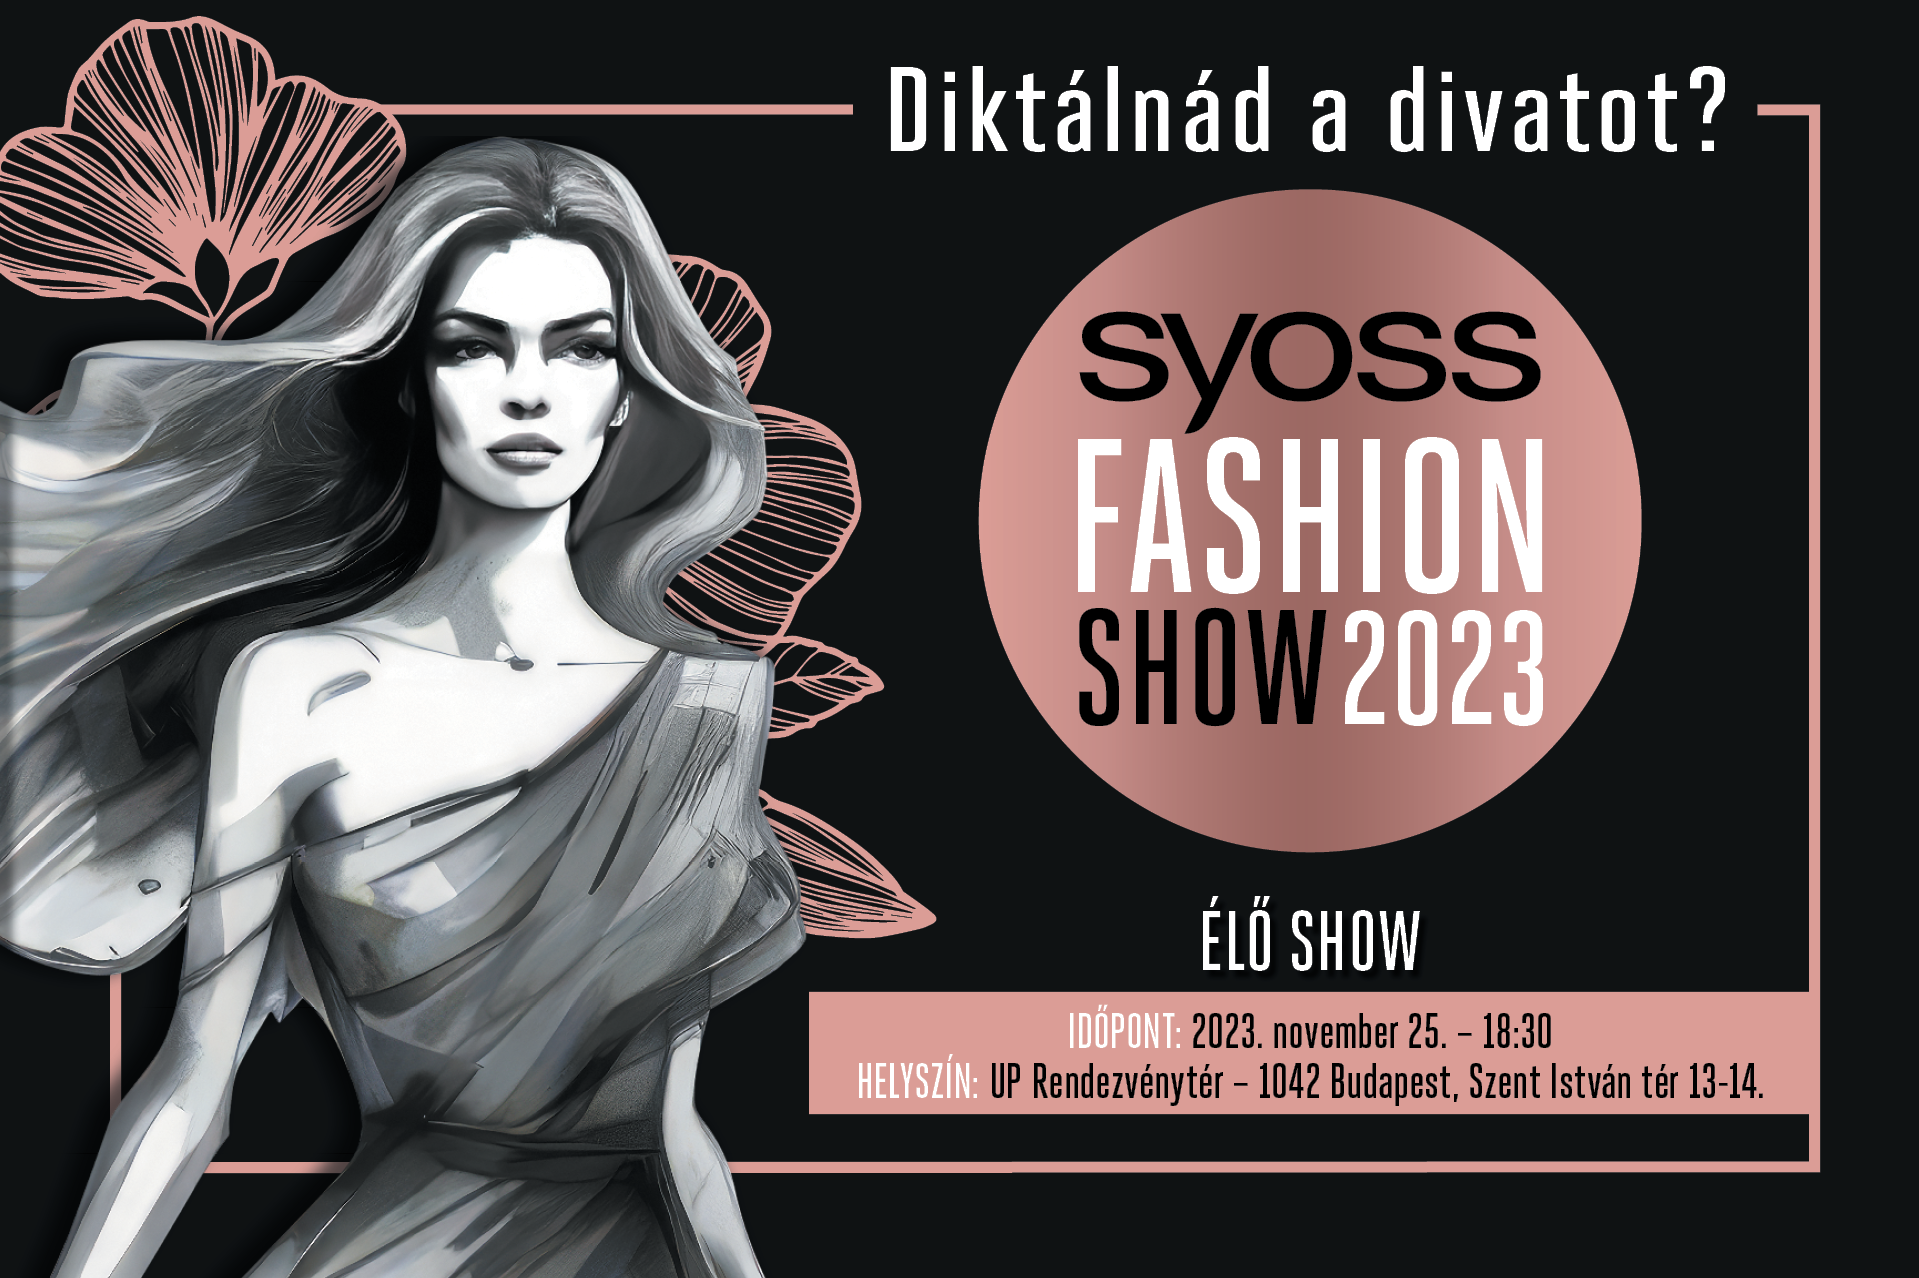 Syoss Fashion Show Hero Image